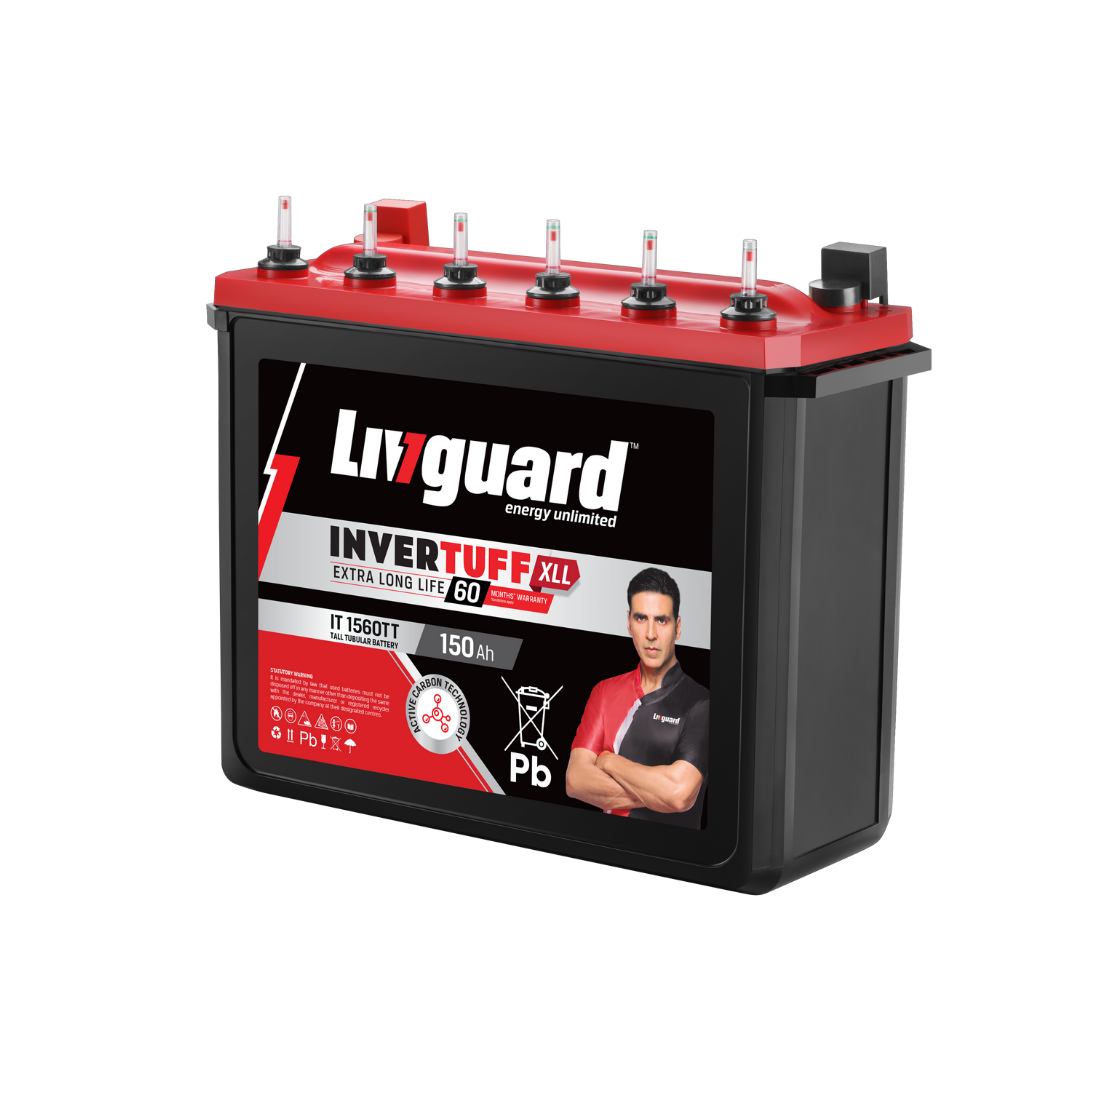 Livguard Inverter Battery IT 1584TT in Jaipur at best price by Divya Jyoti  Sales - Justdial